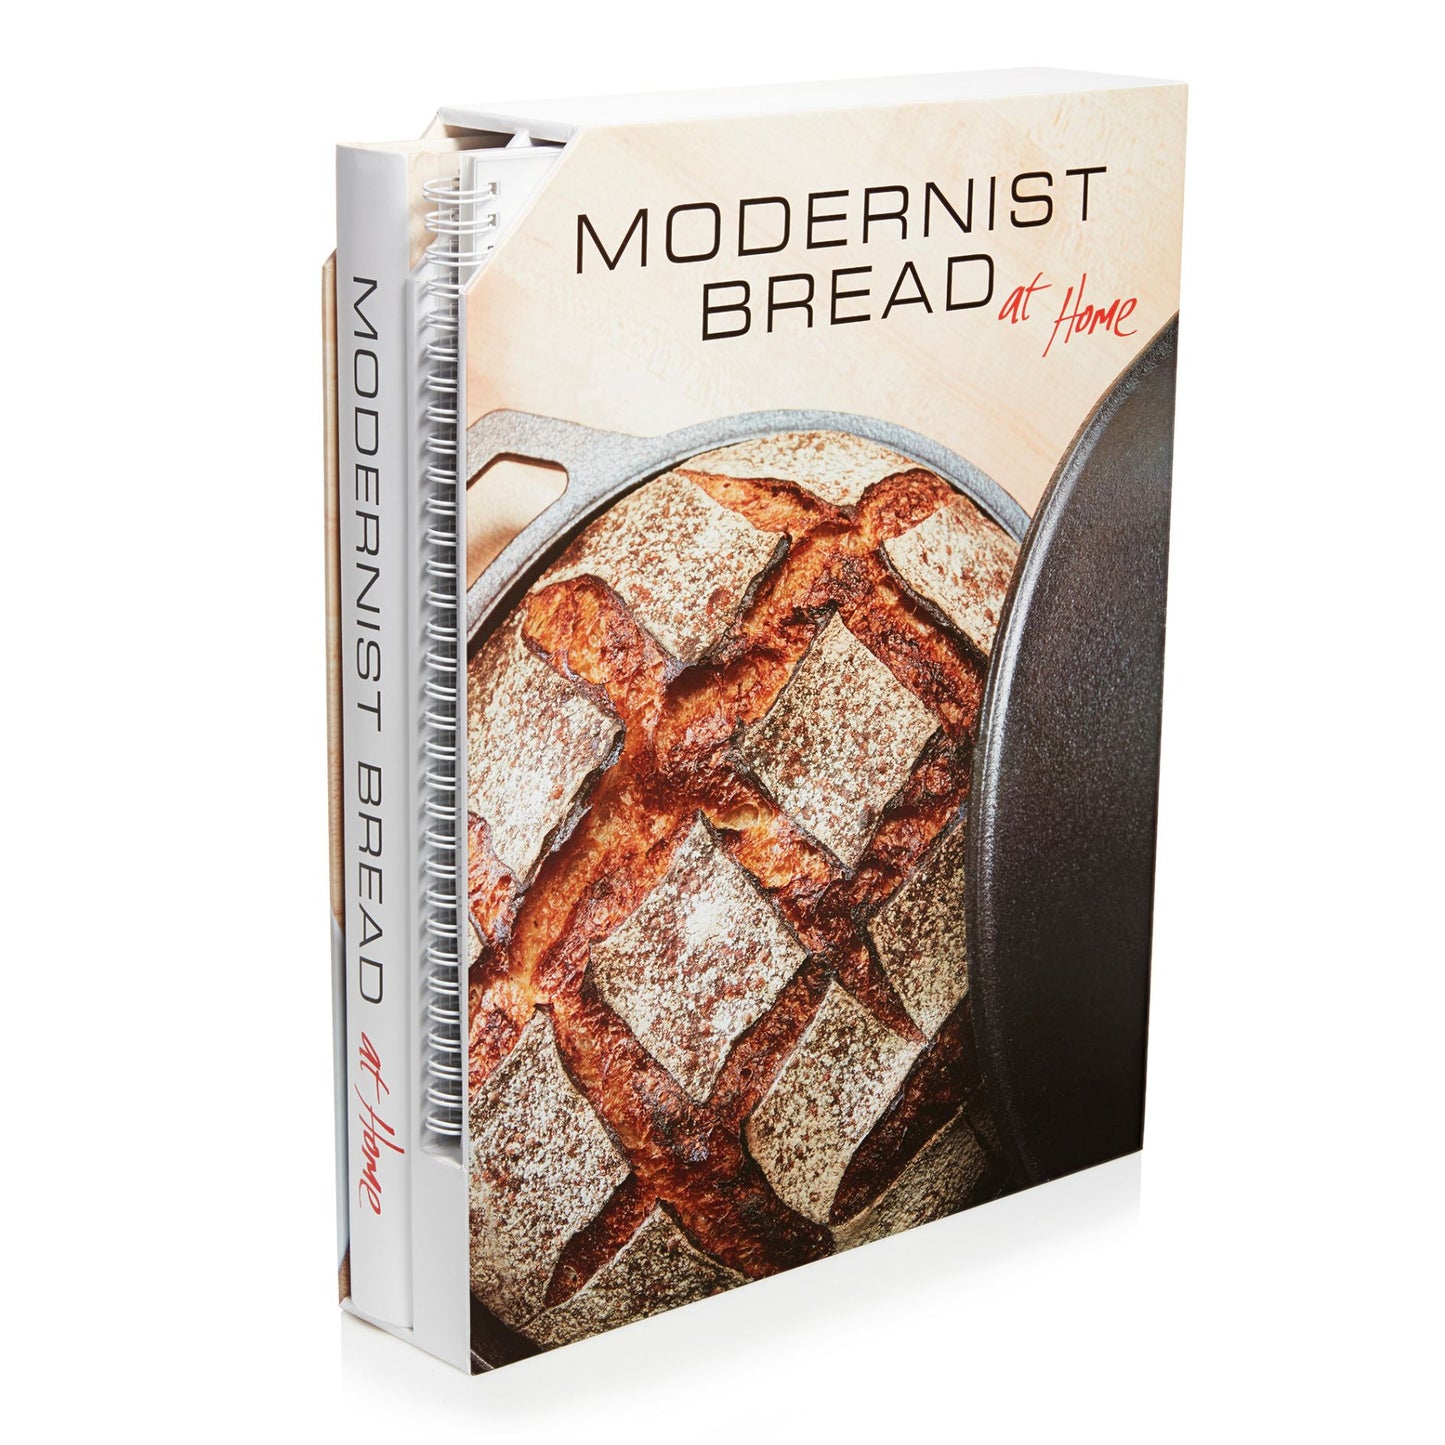 Modernist Bread At Home (Nathan Myhrvold)